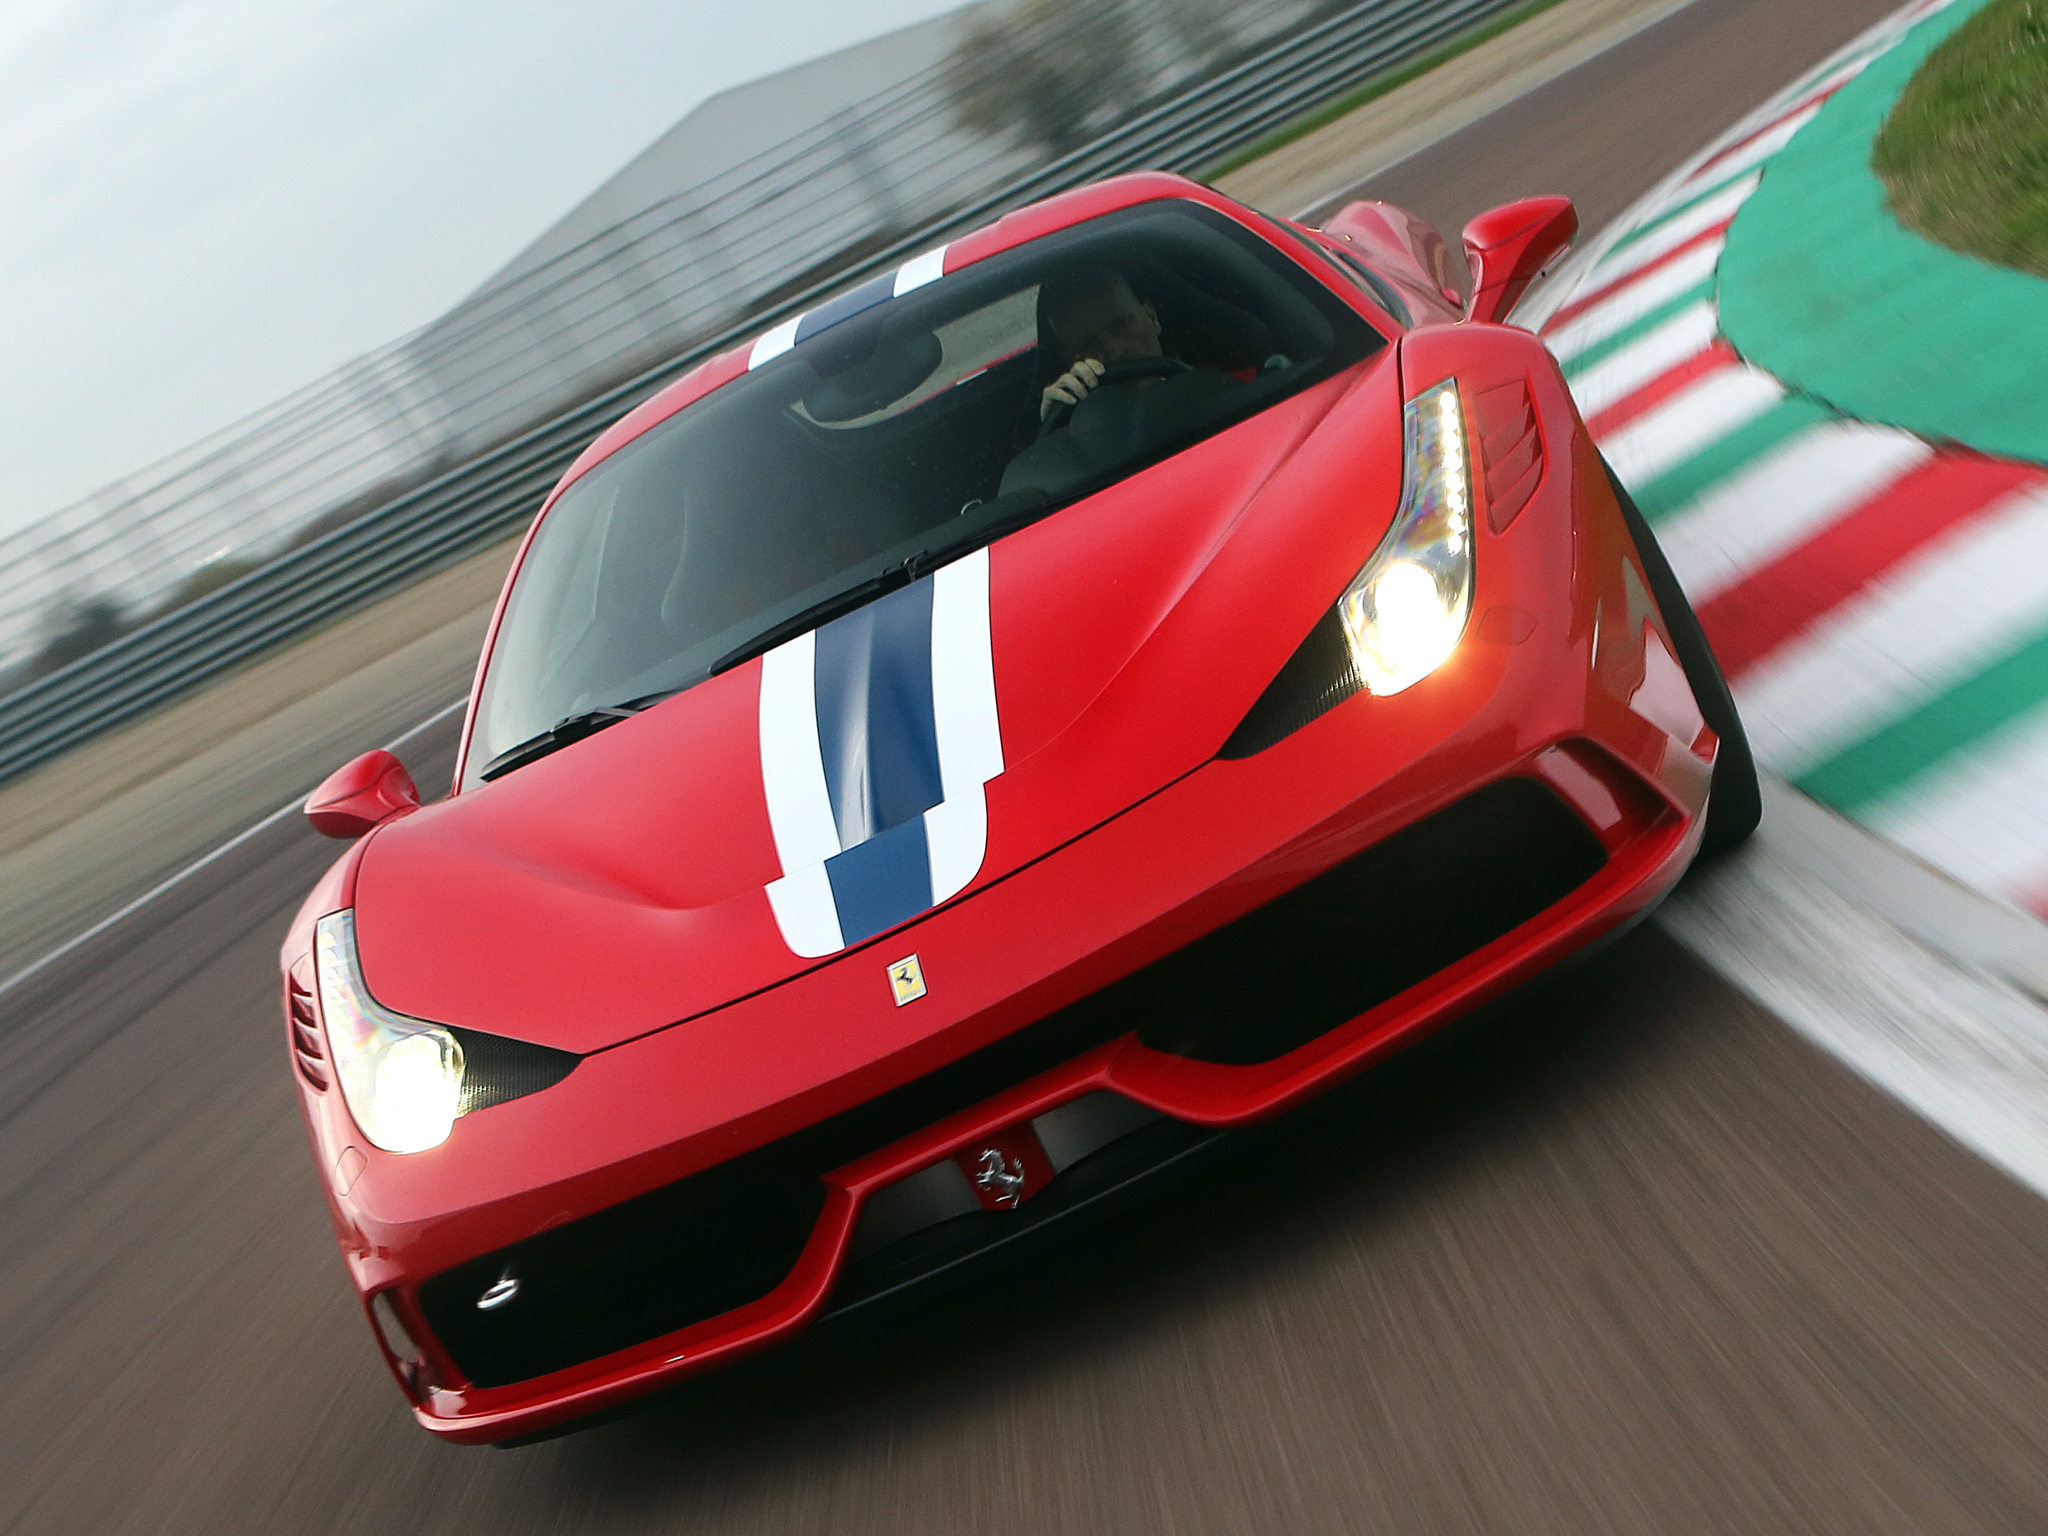 2013, Ferrari, 458, Speciale, Supercar, Rw Wallpaper